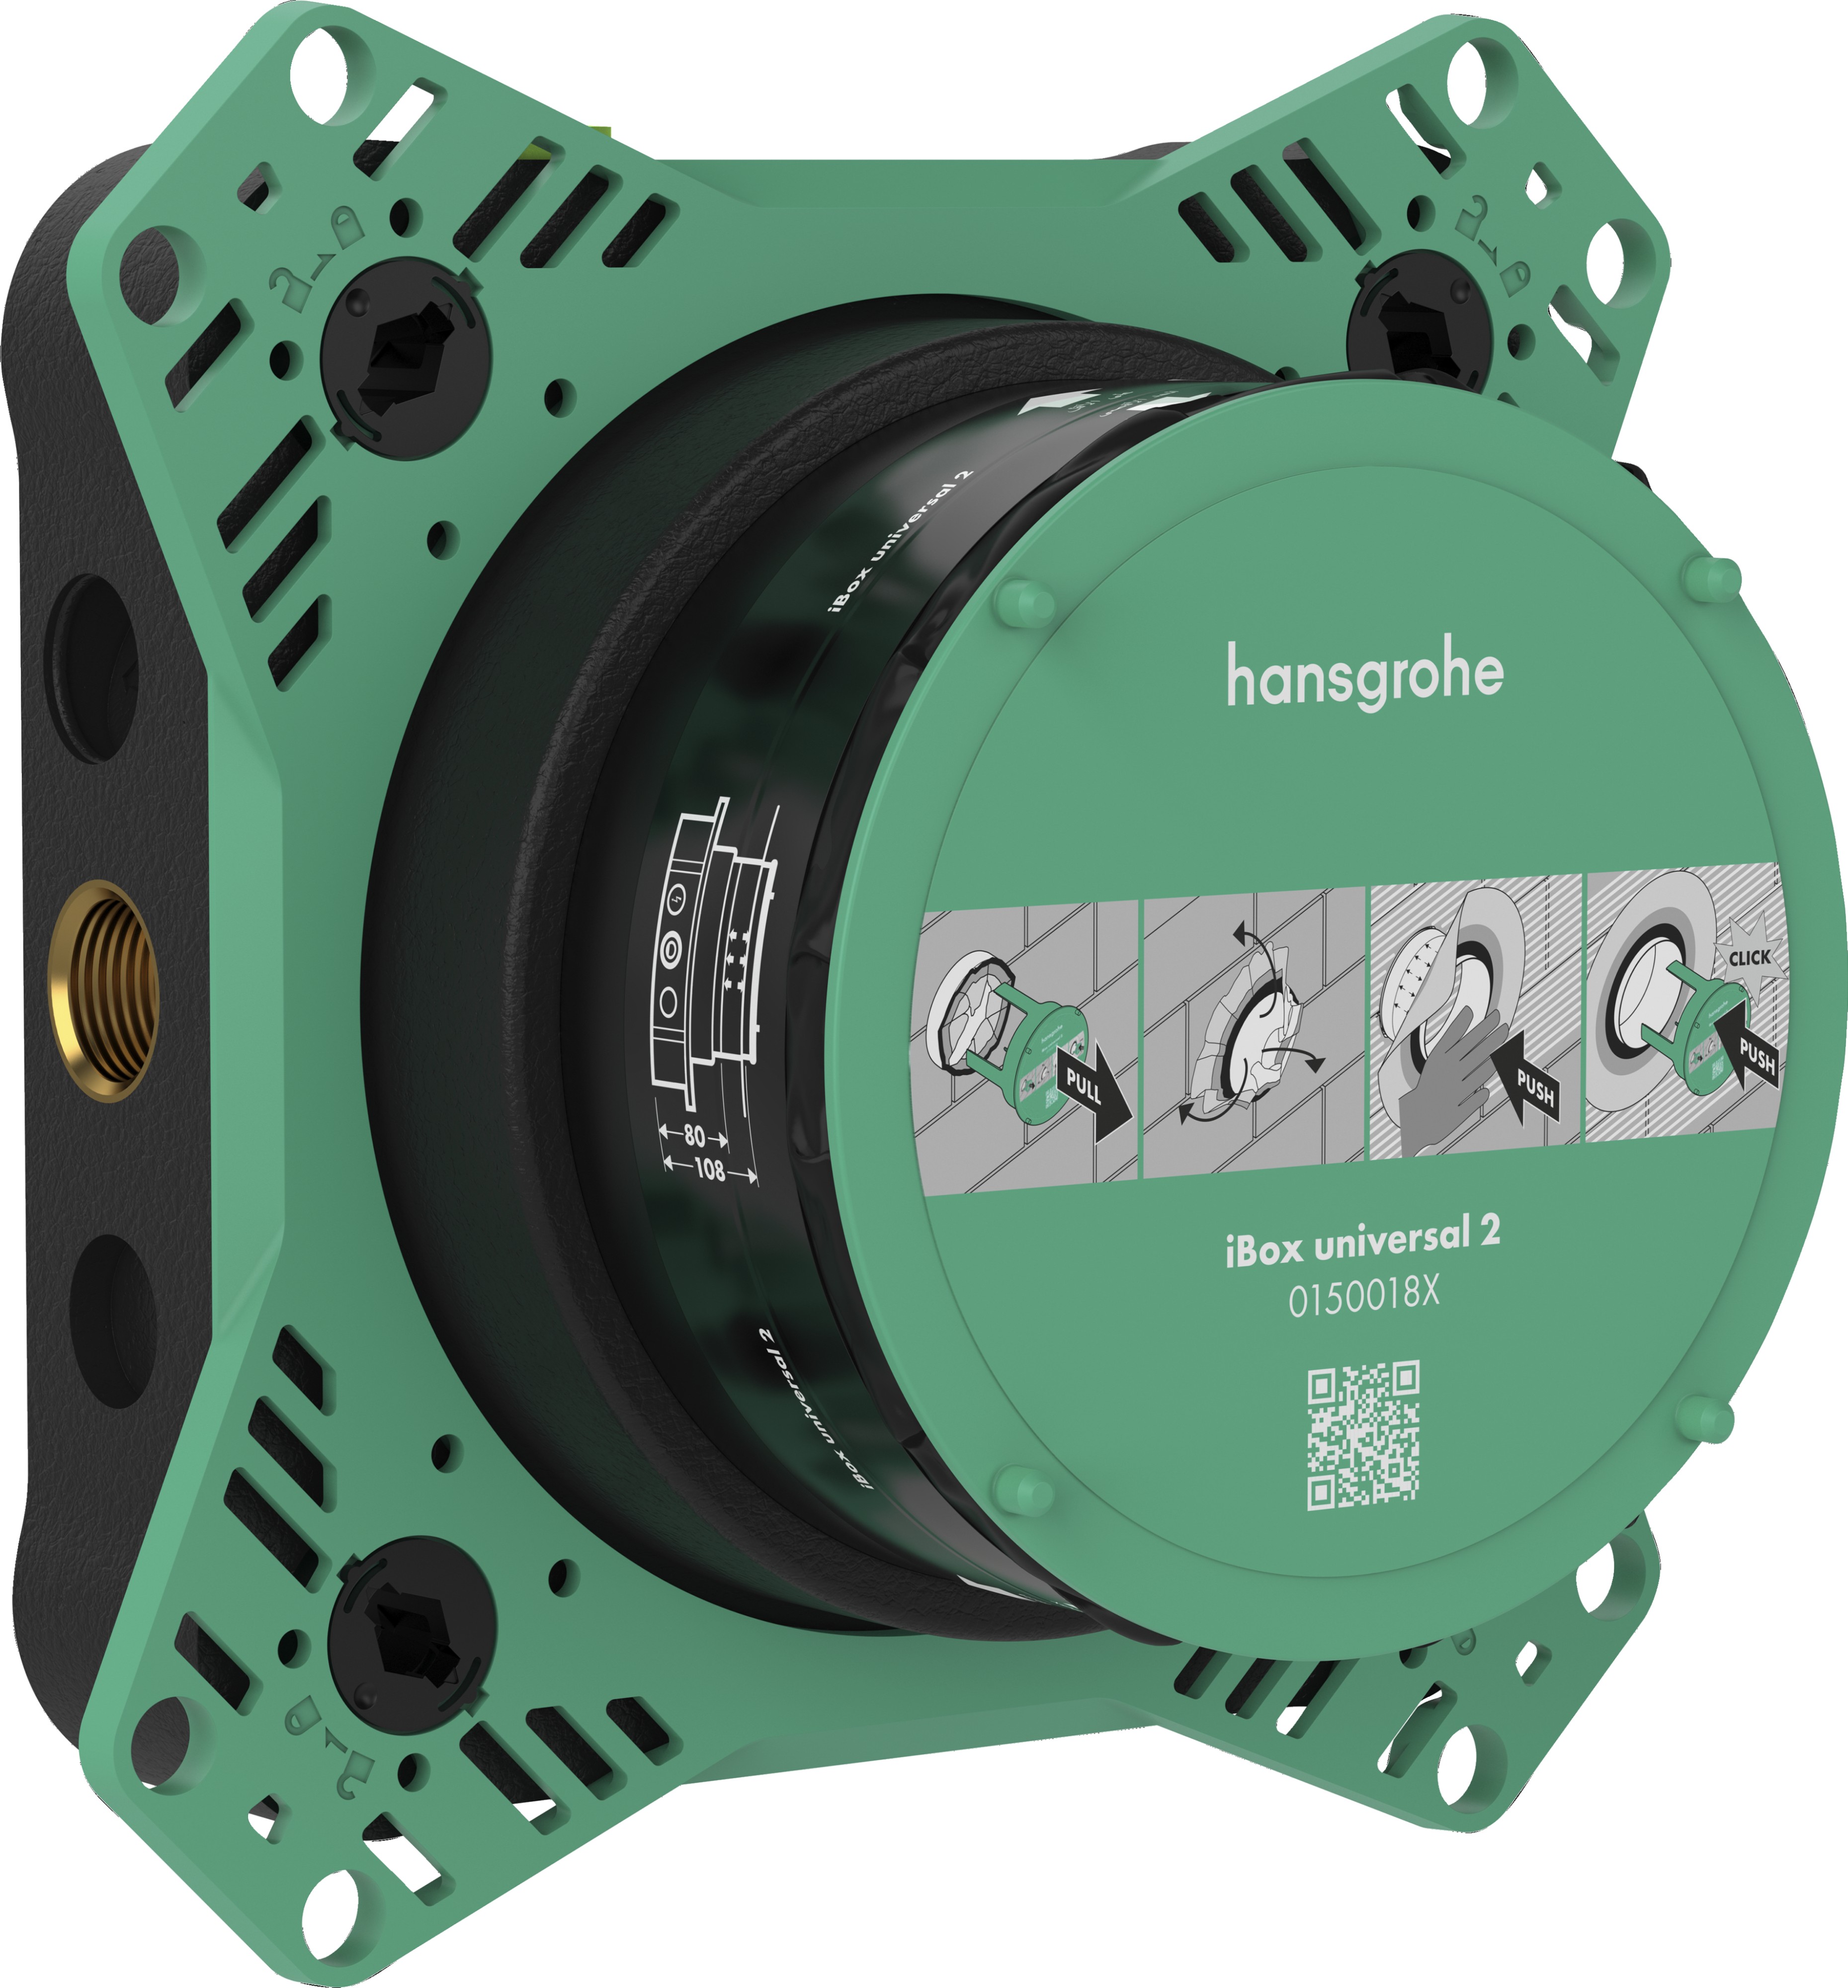 Corp Incastrat Hansgrohe Ibox Universal 2 Pentru Baterii Incastrate ( 26.01500180.HG )